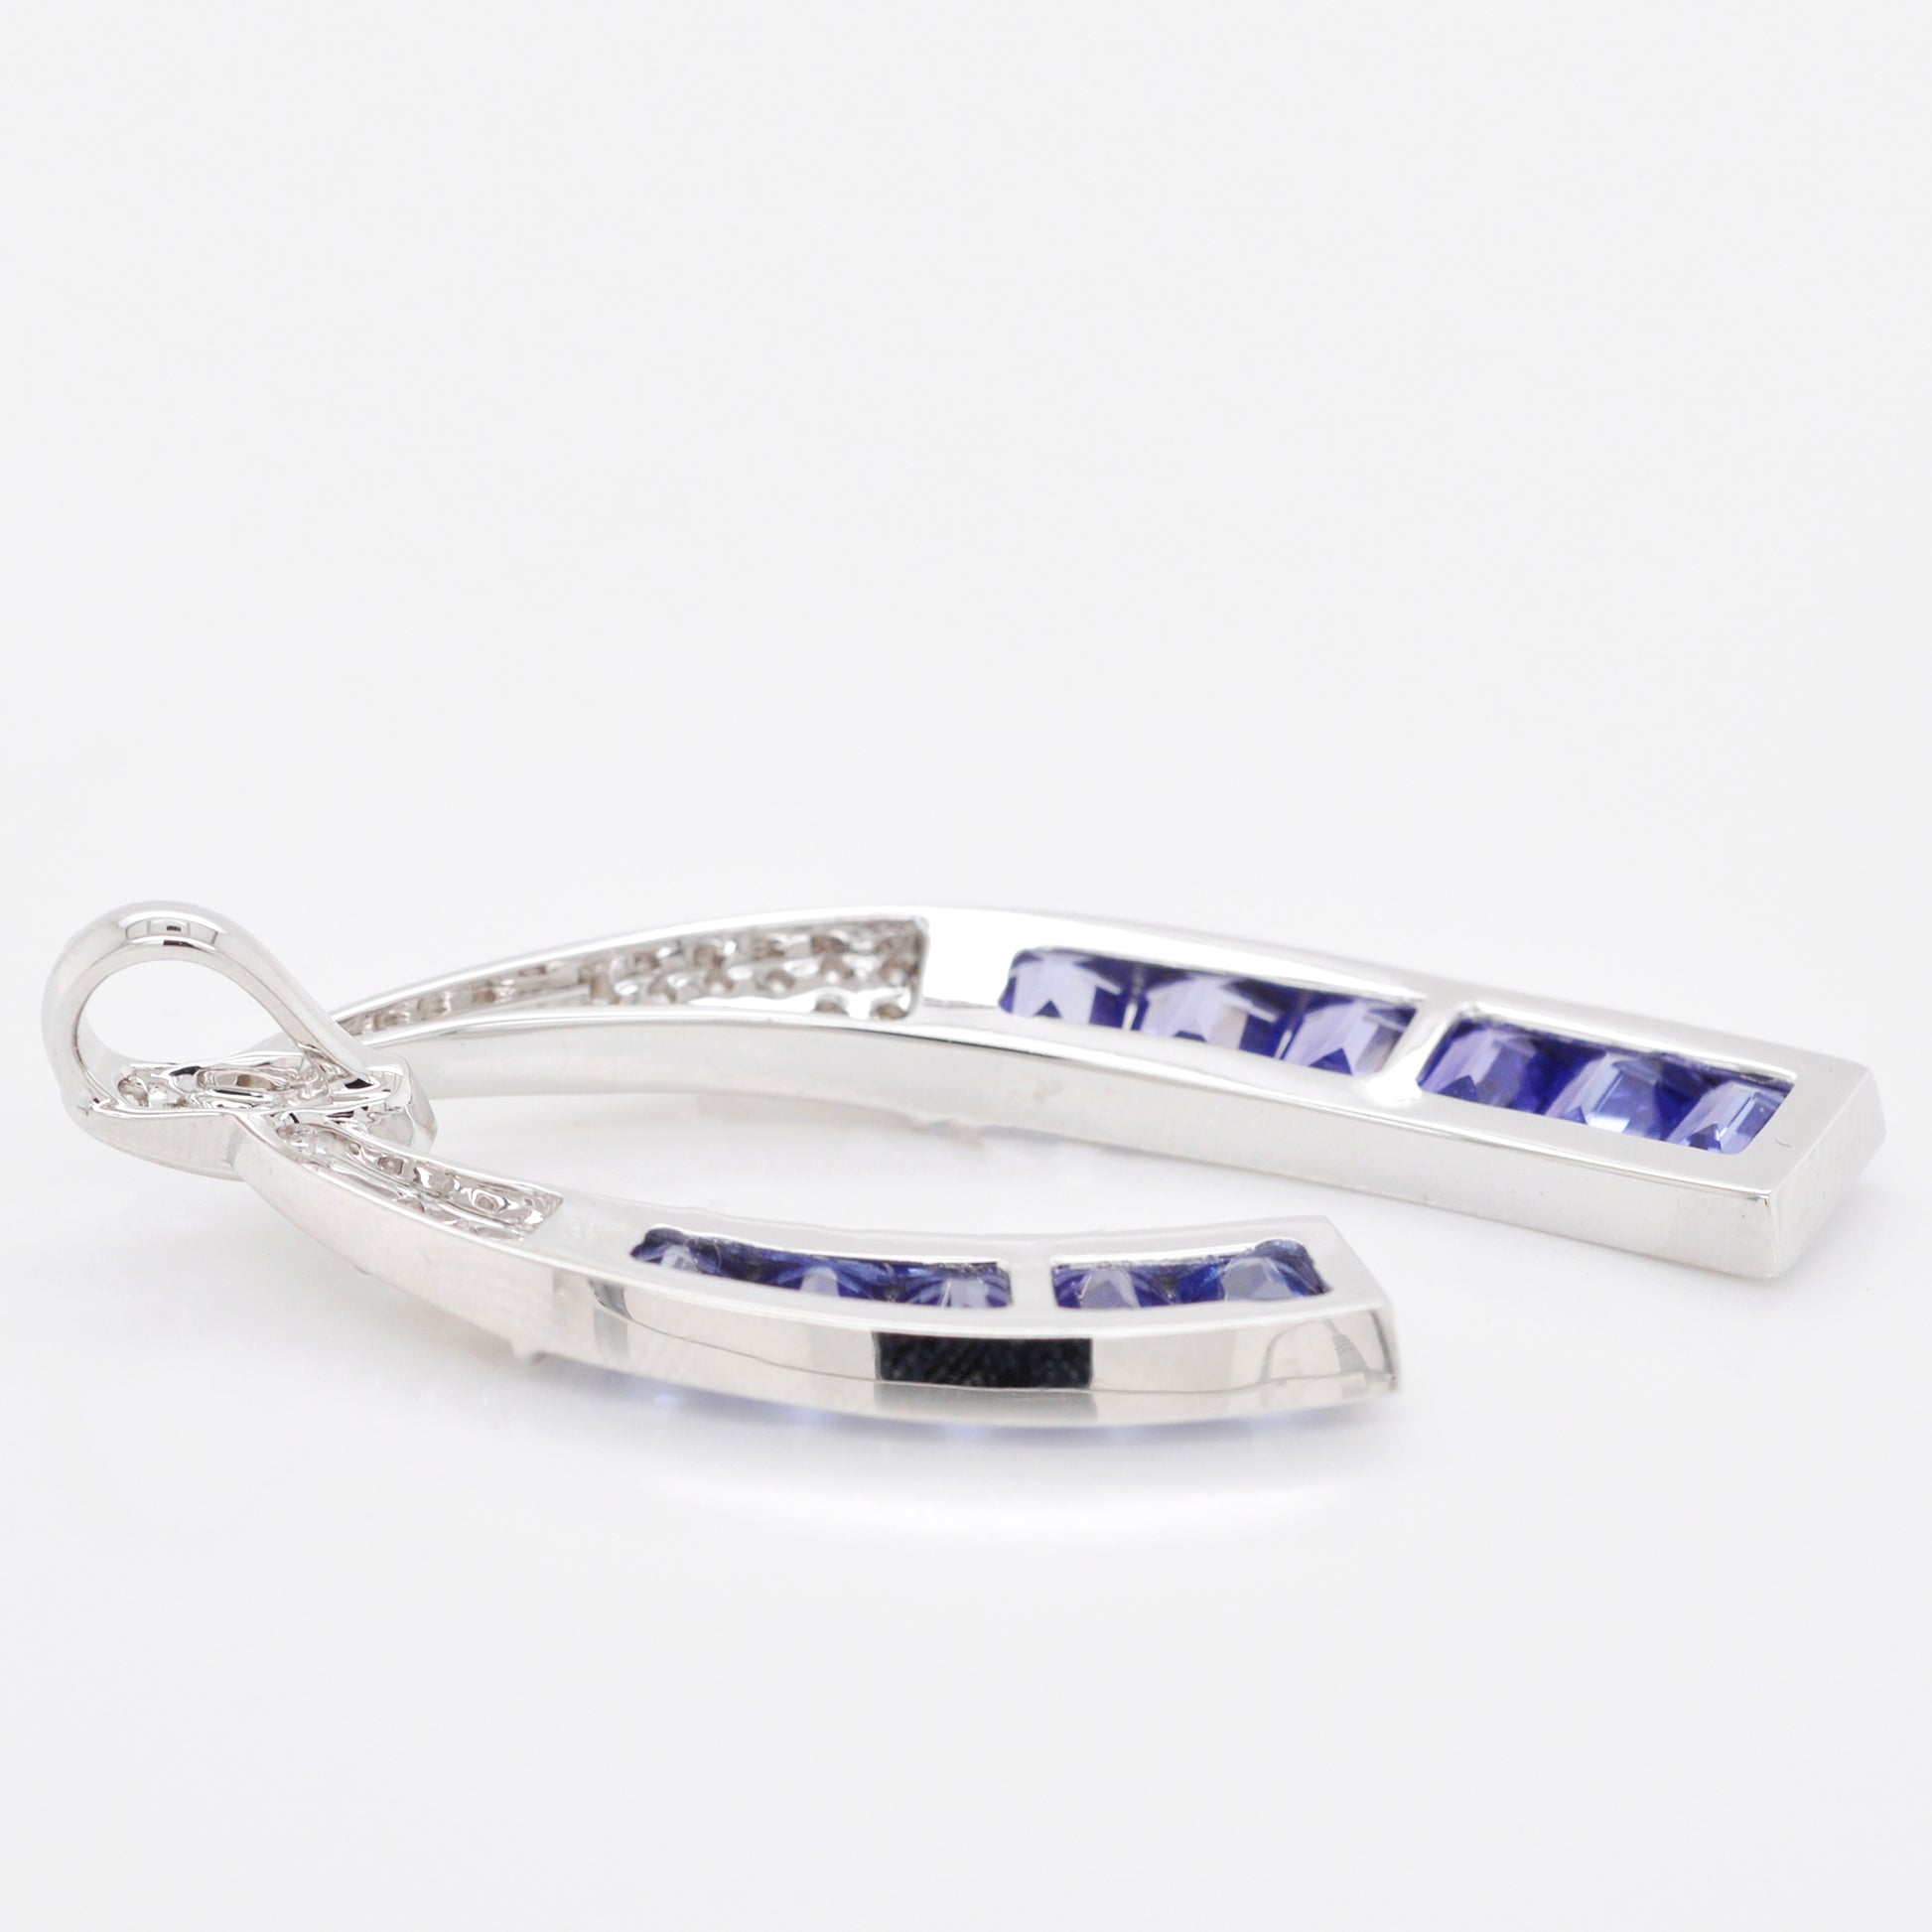 Gemstone pendant with tanzanite and baguette diamond horseshoe design